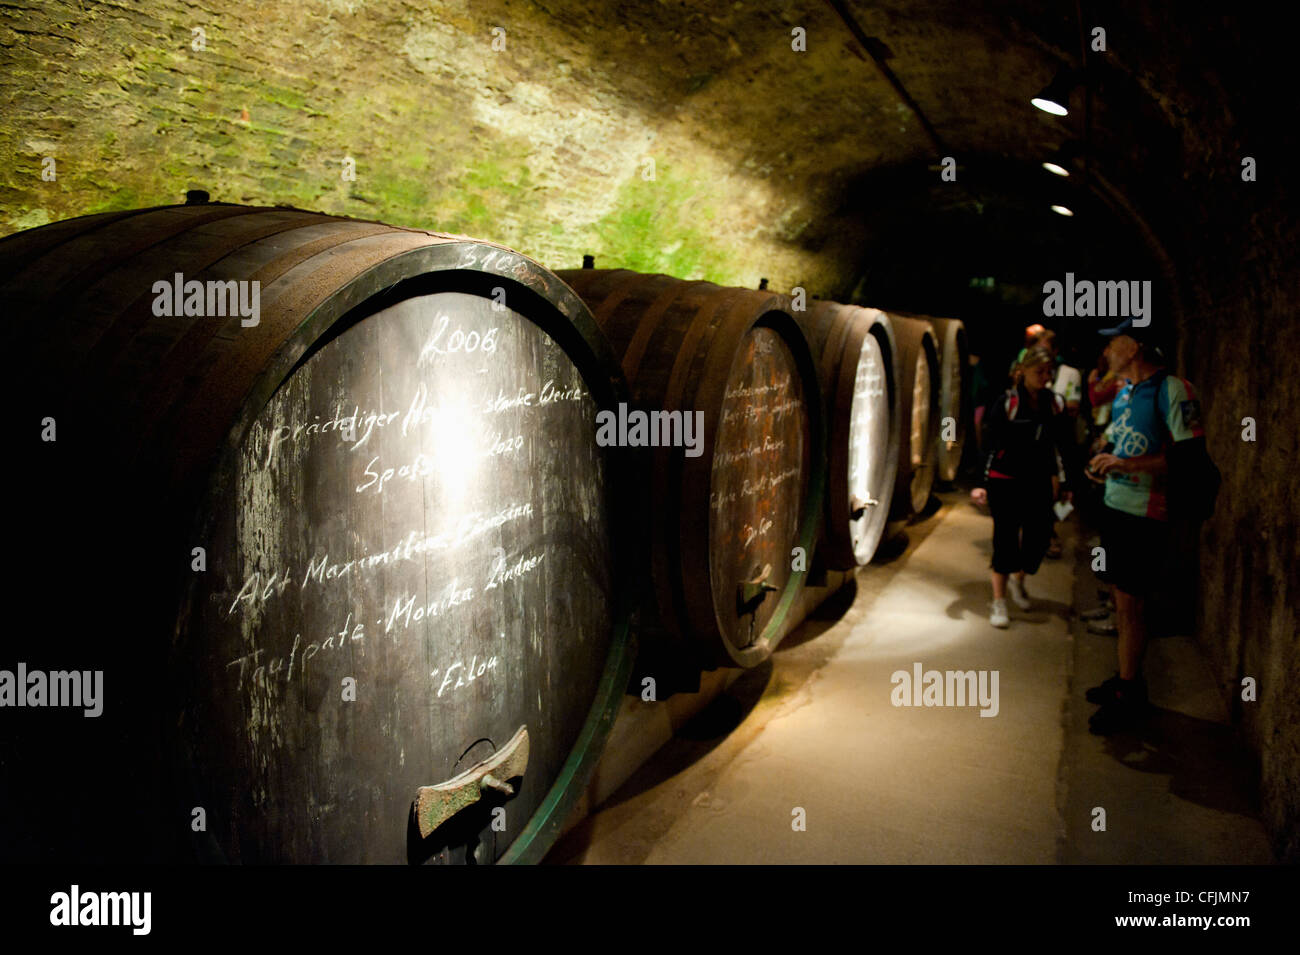 People and wine barrels inside cellar of Loisium Winery, Langelois, Niederosterreich, Austria, Europe Stock Photo